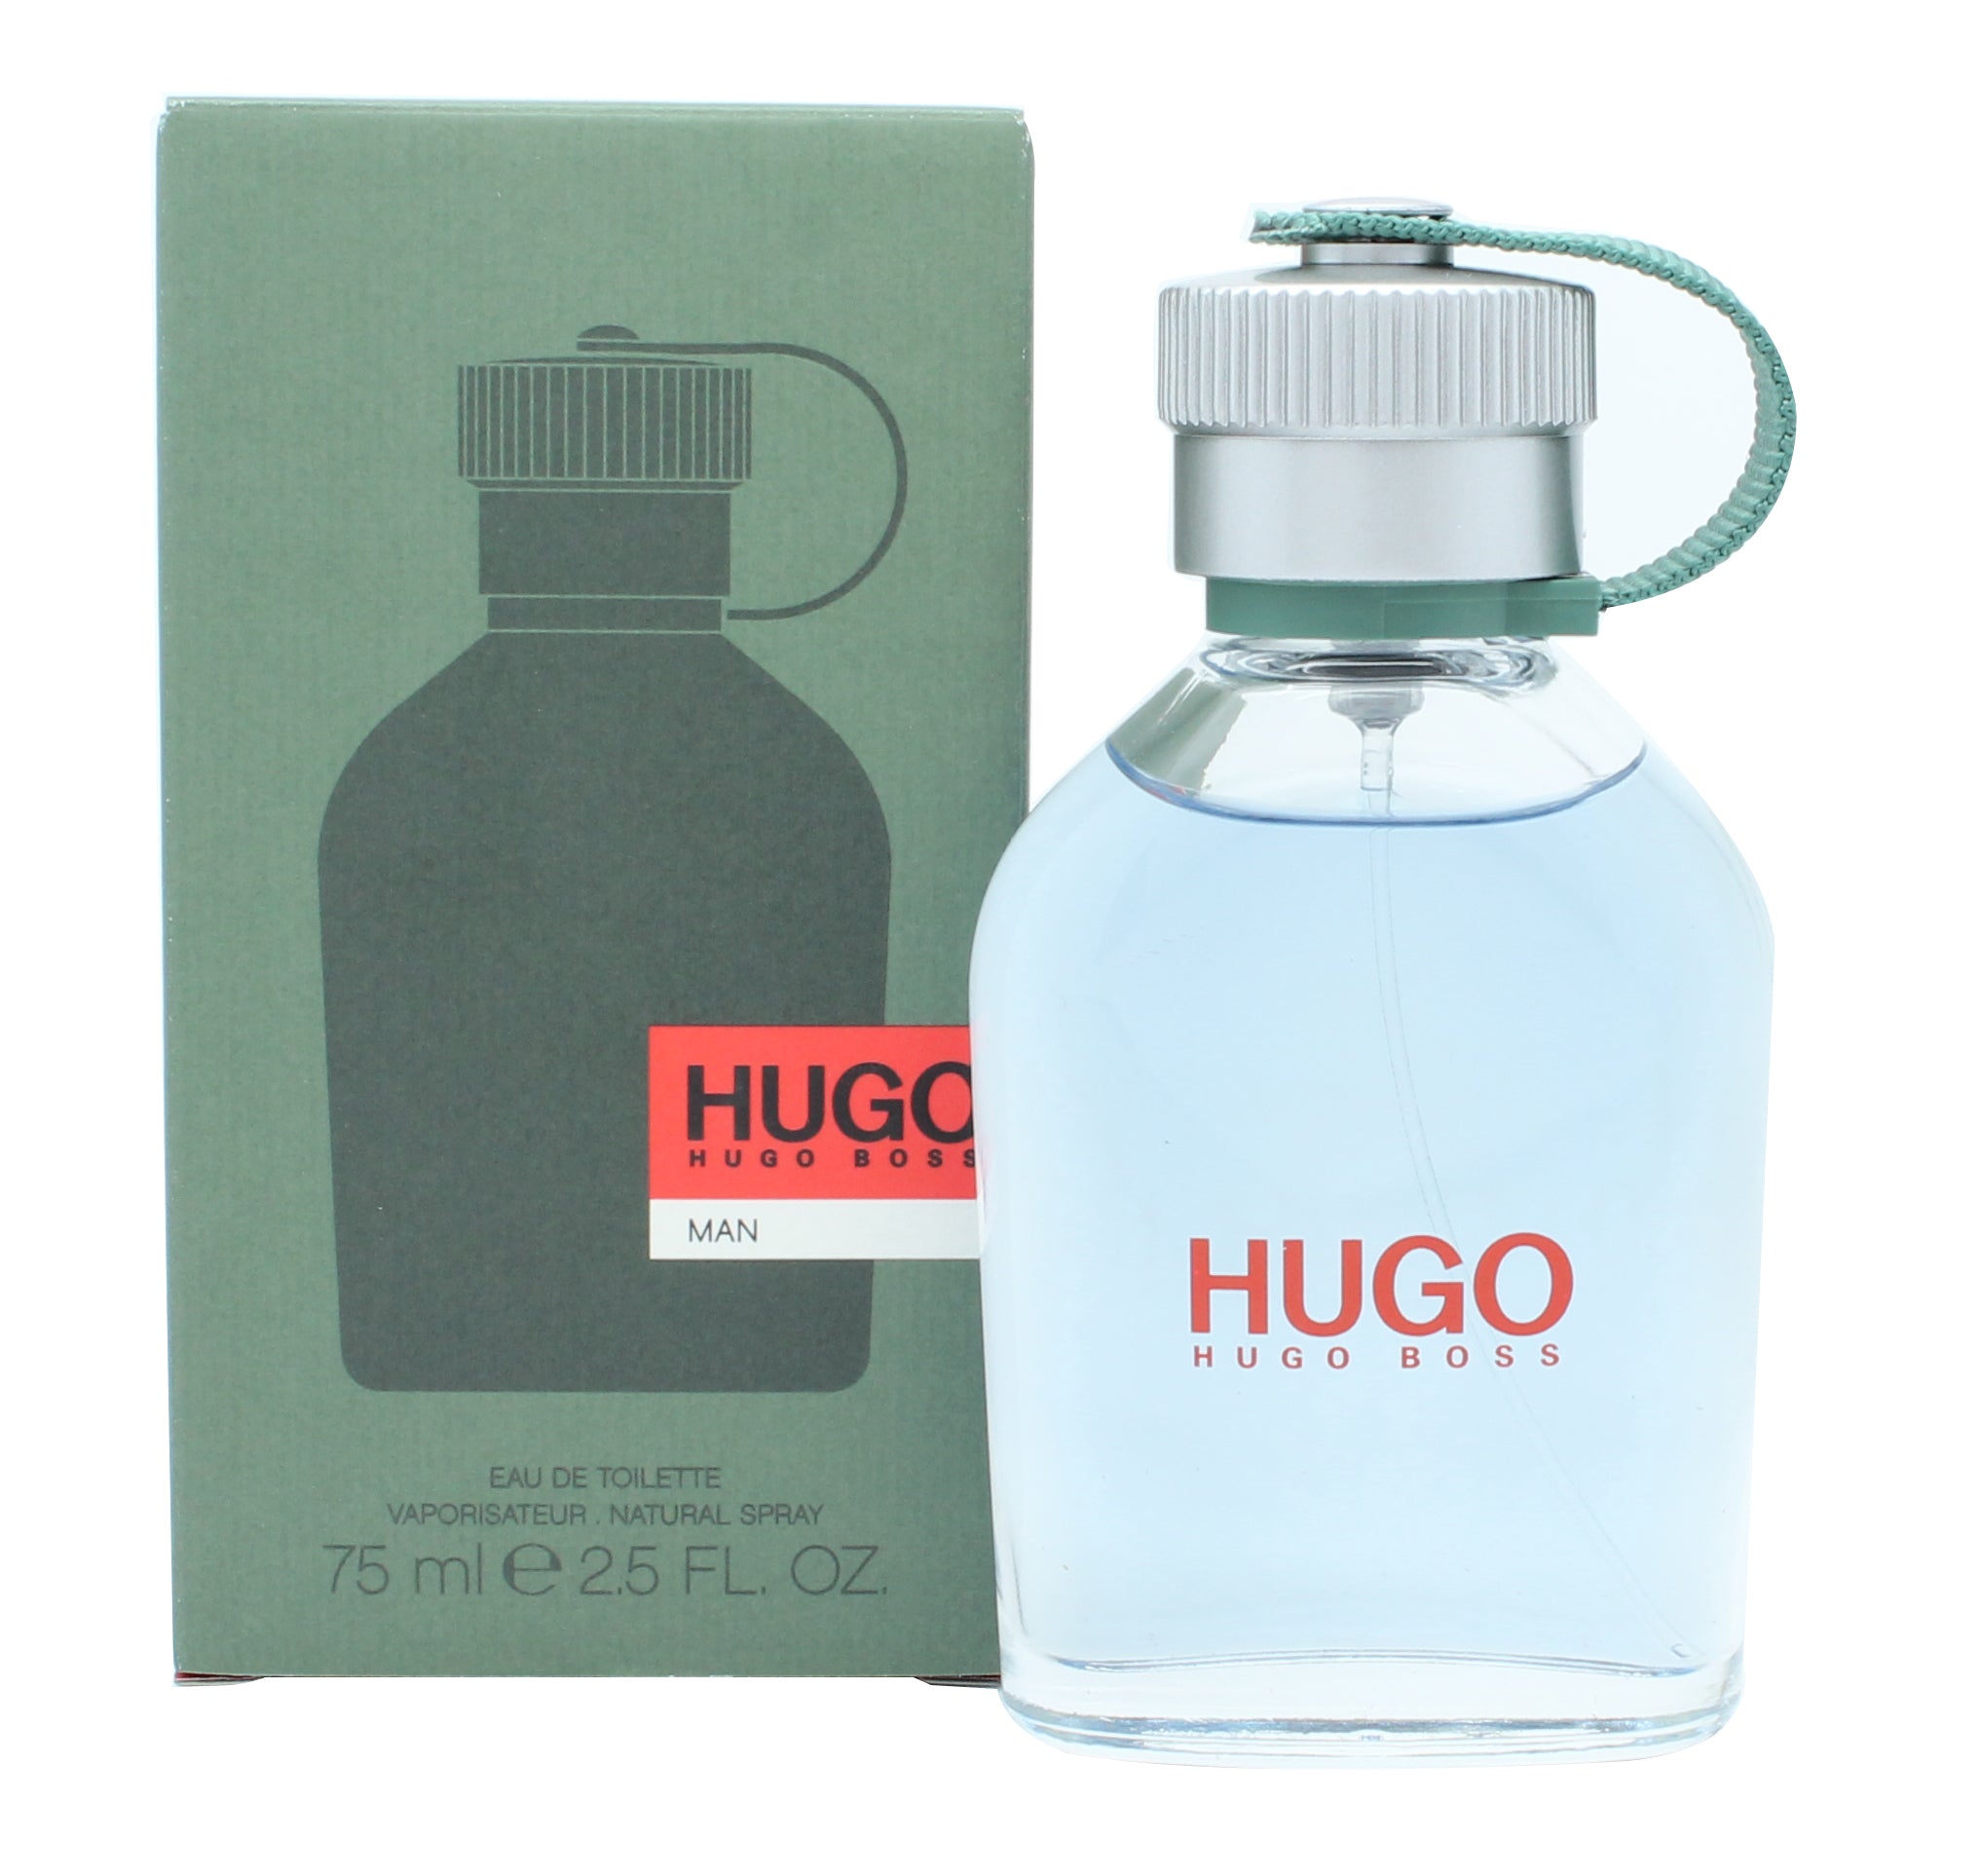 View Hugo Boss Hugo Eau de Toilette 75ml Spray information